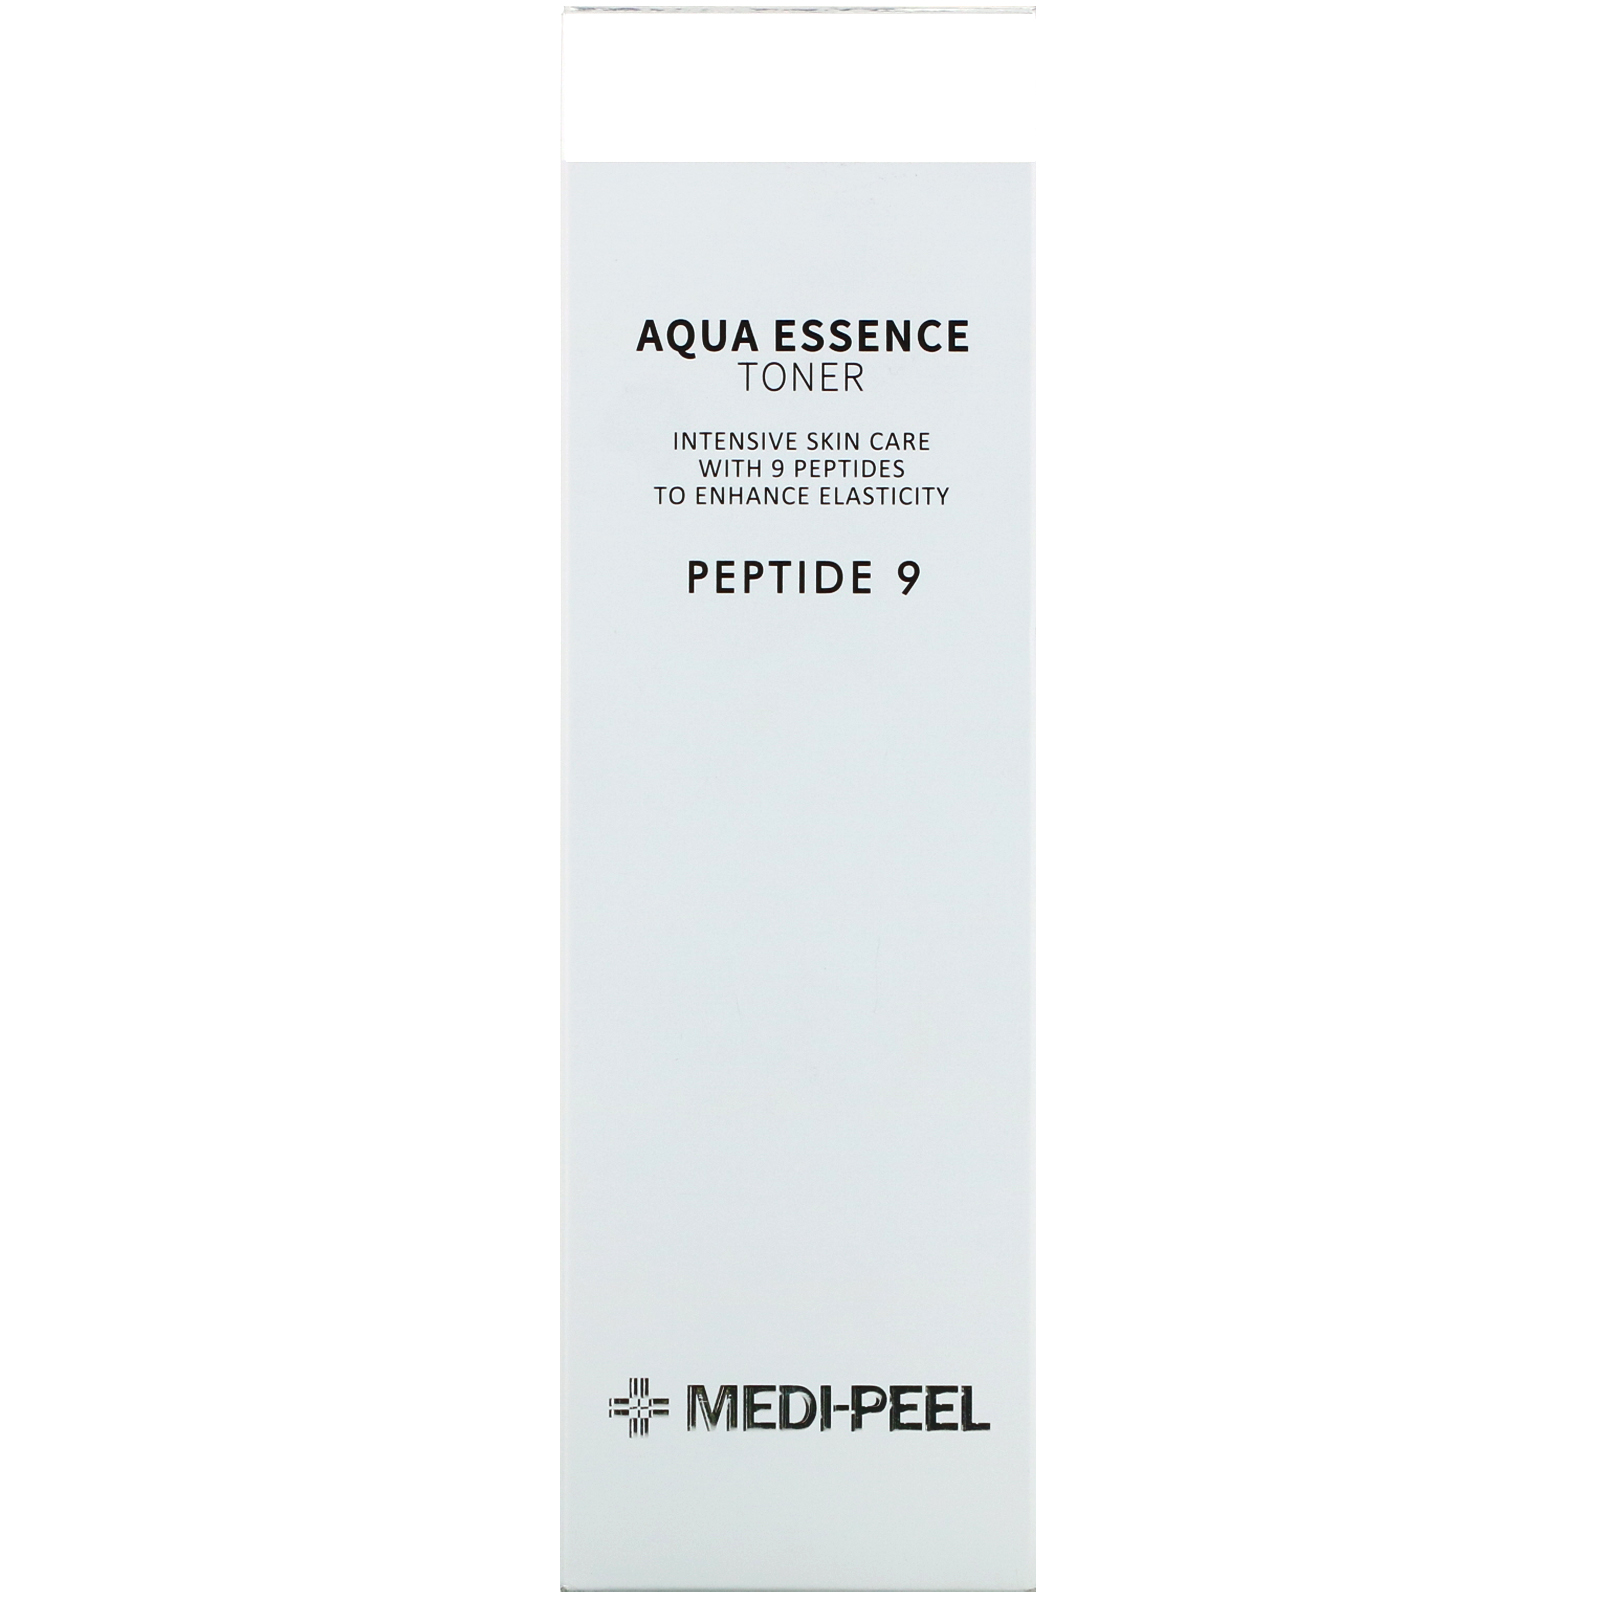 Aqua essence medi peel. Medi-Peel тонер-эссенция пептидный для зрелой кожи Peptide 9 Aqua Essence Toner 250 мл. Тонер Medi Peel Peptide 9. Peptide 9 Aqua Essence Toner. Меди пил тонер 9 пептидов.